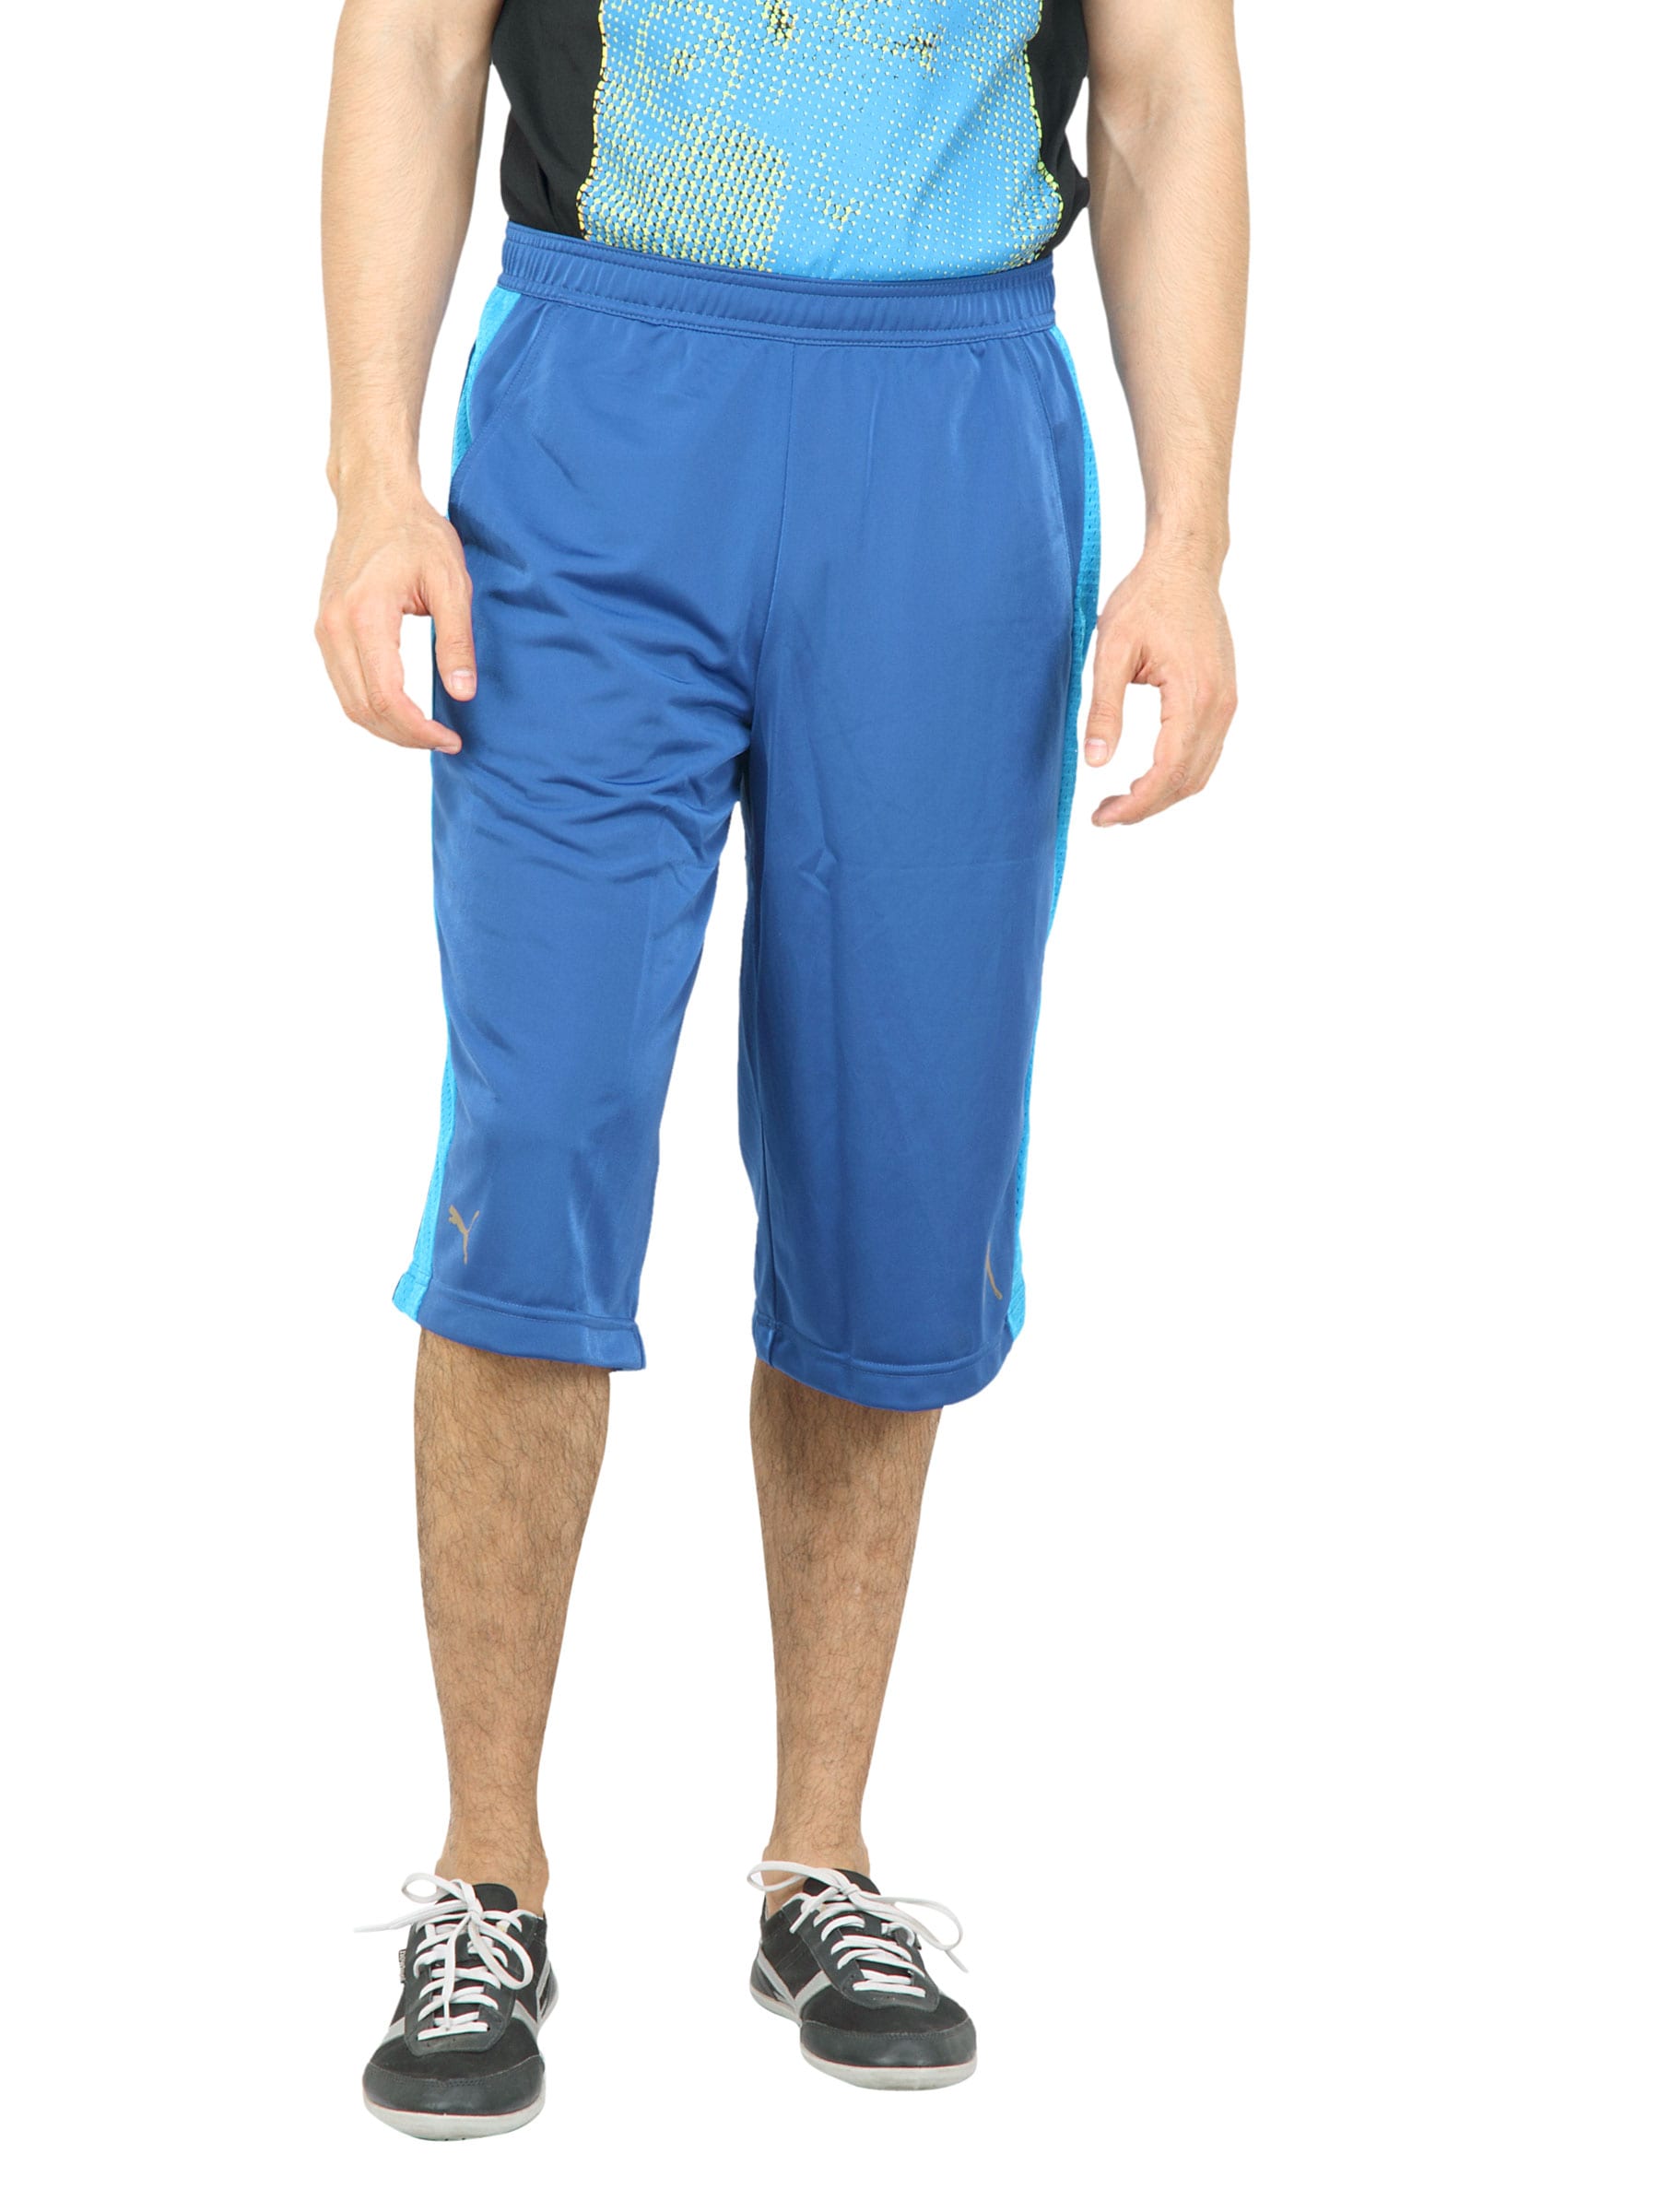 Puma Men Dazzle Blue Shorts